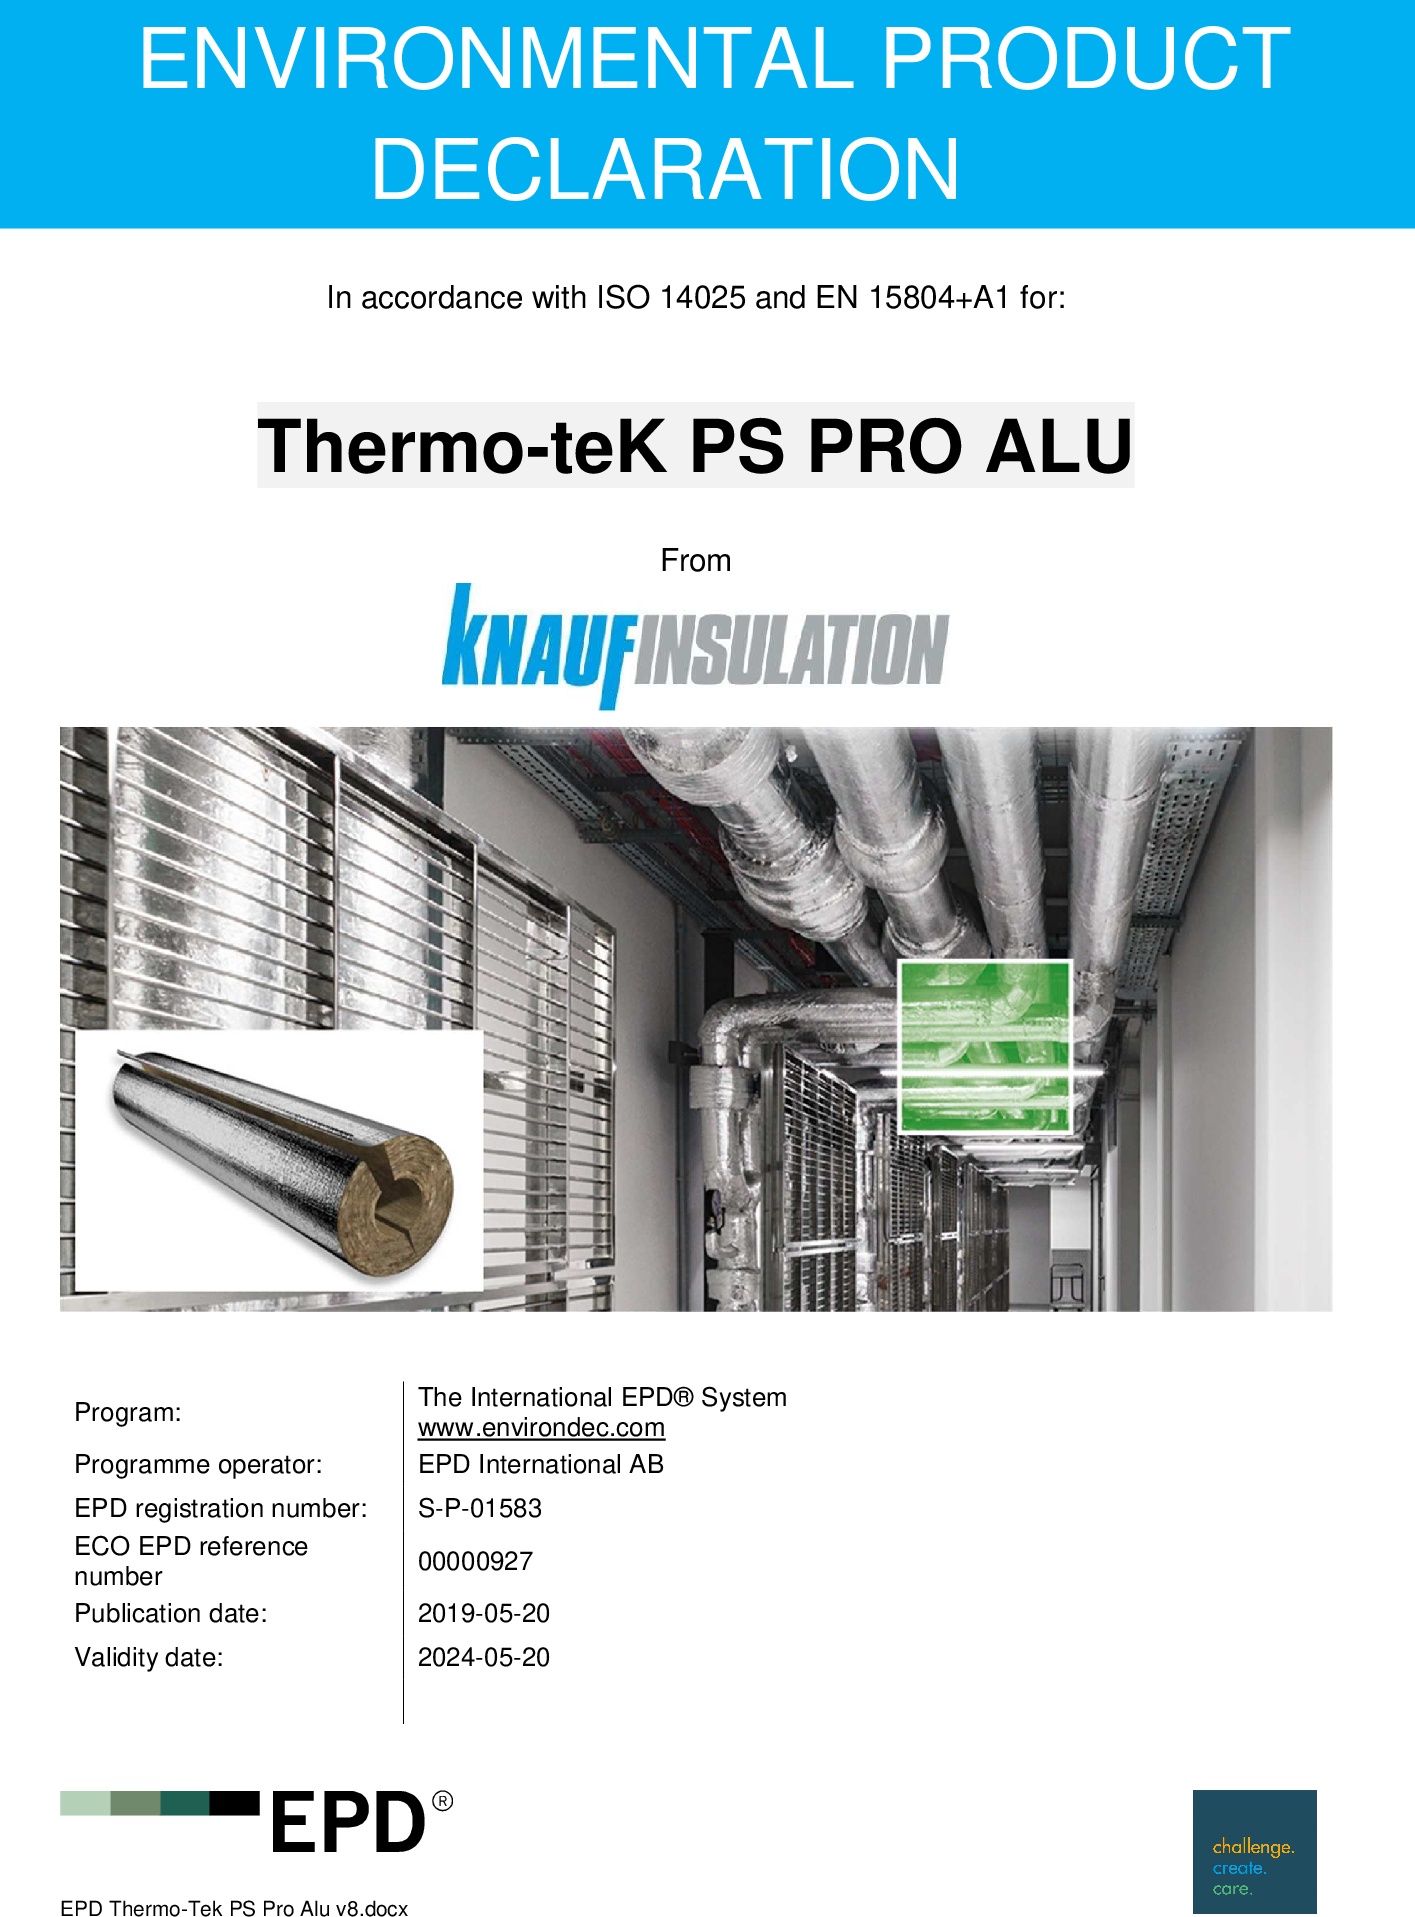 EPD Thermo-teK PS Pro ALU